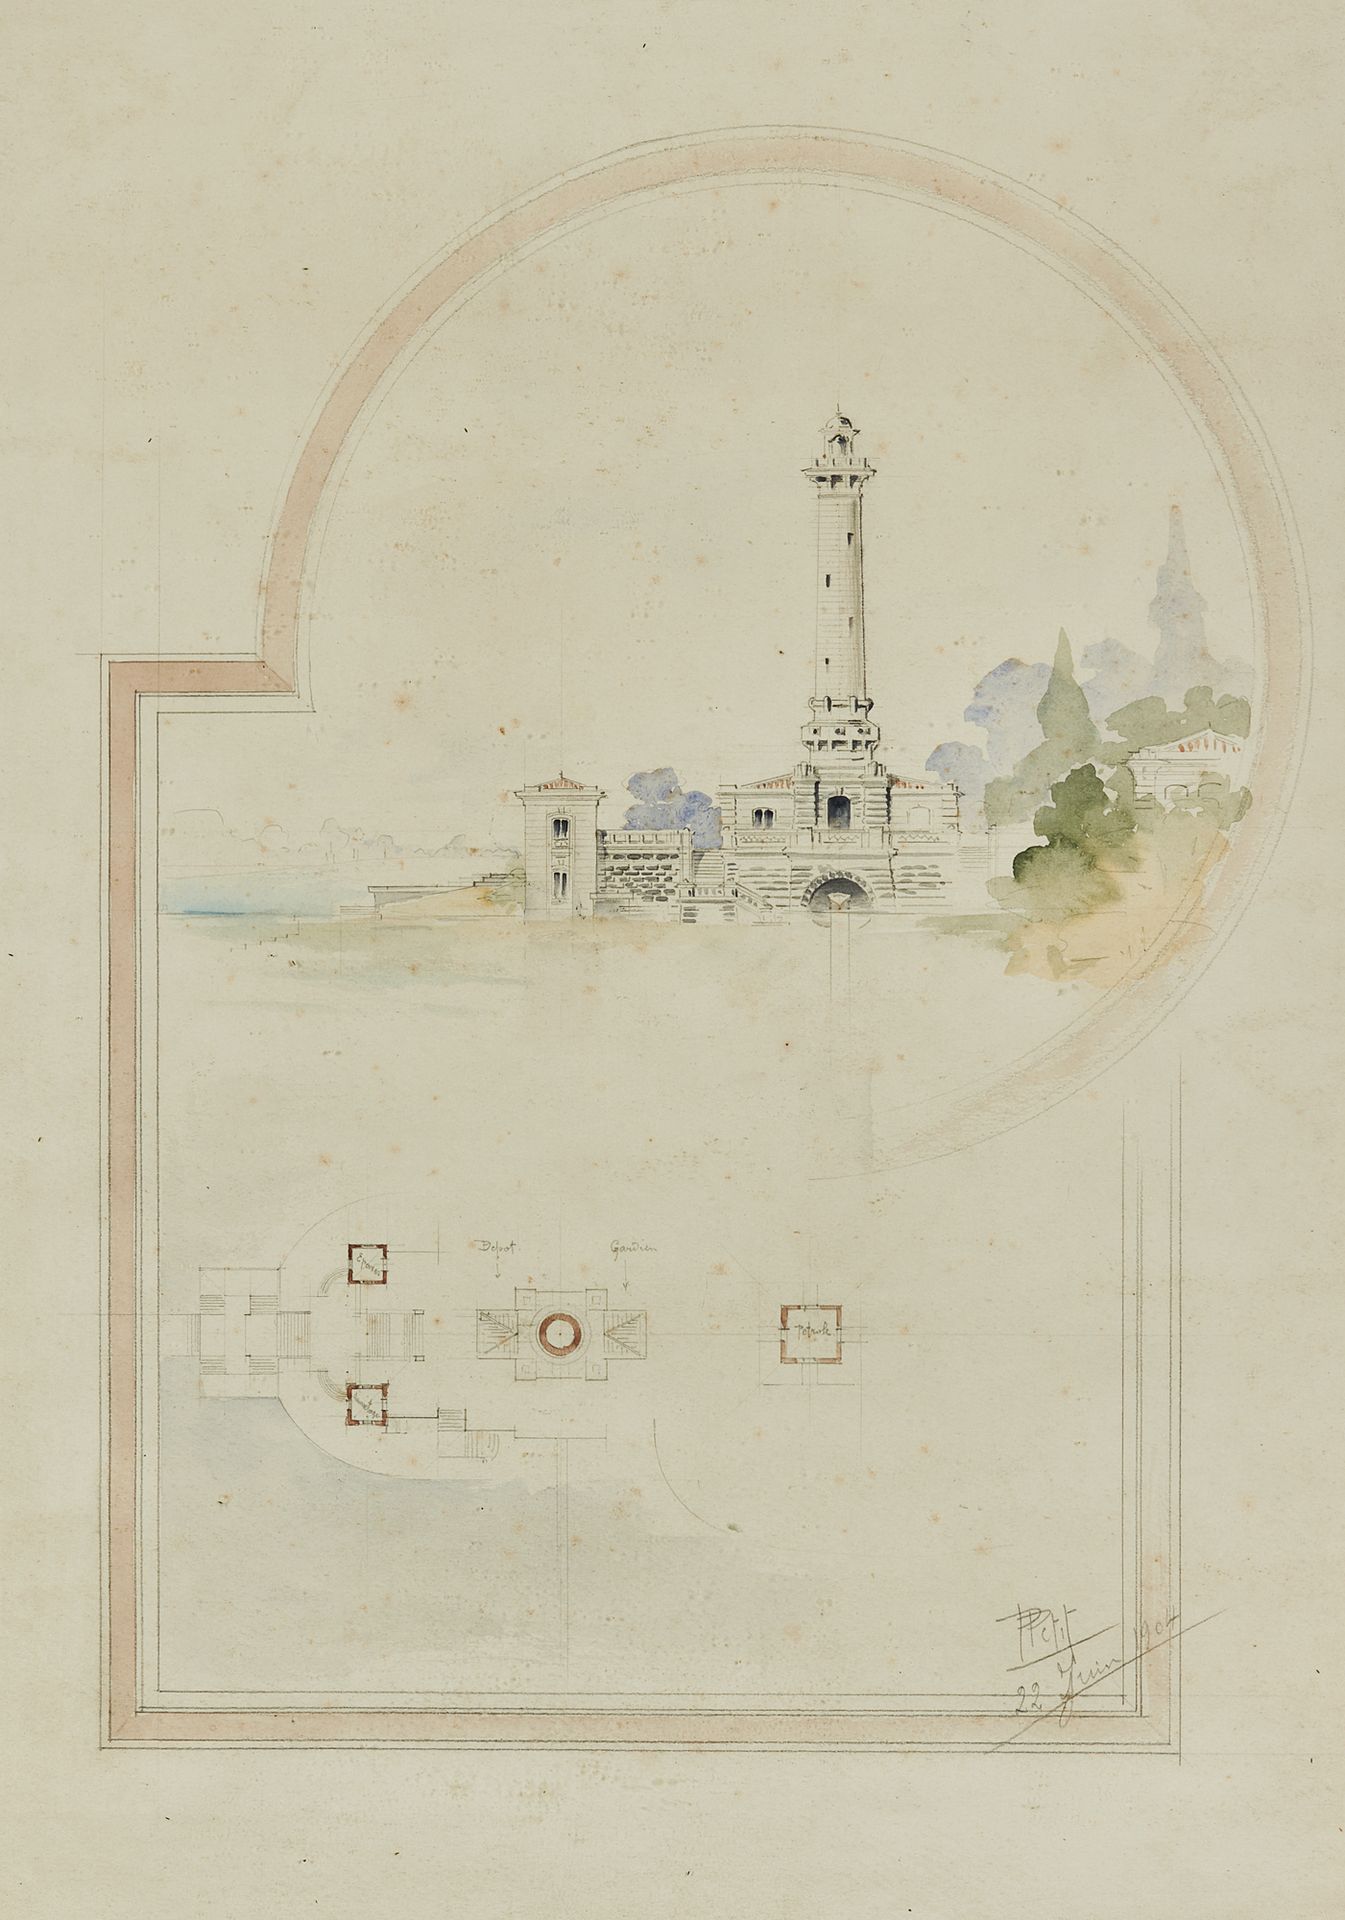 P. PETIT 一座陆地灯塔的视图及其内部平面图
纸上水彩画，右下方有签名，日期为1904年6月22日
55 x 37厘米